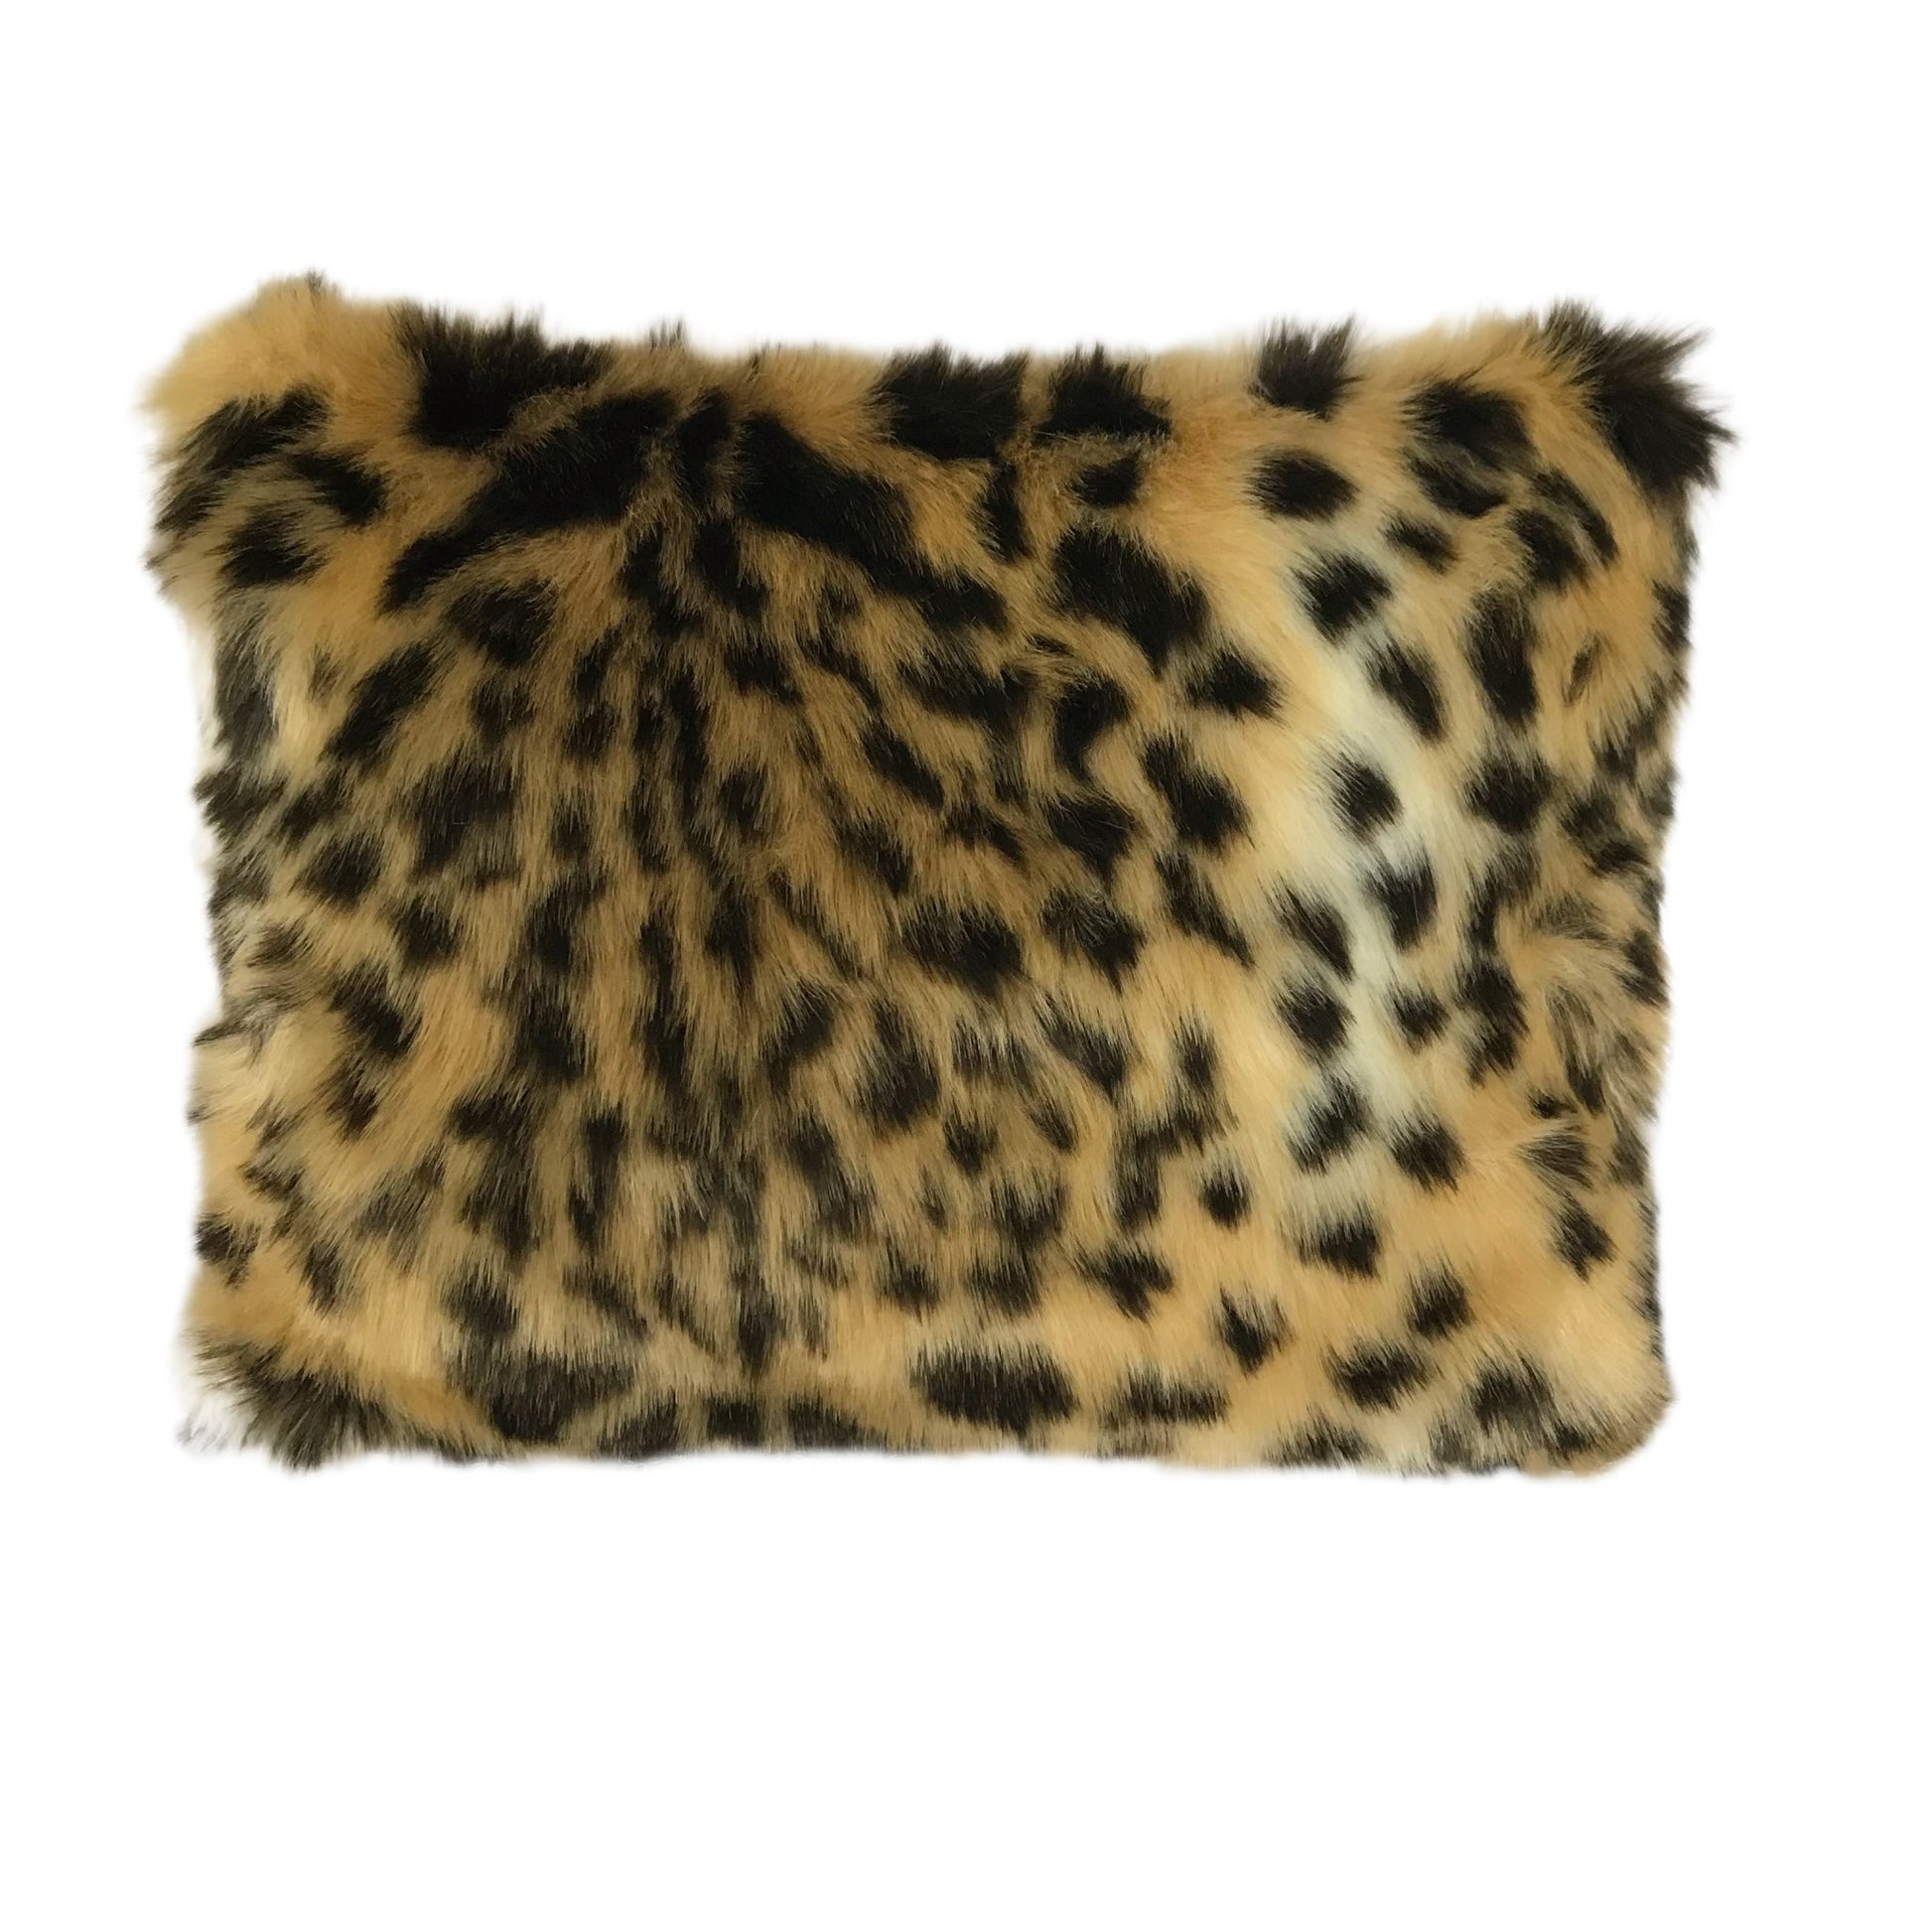 Leopard Print Faux Fur Pillow - High Quality Faux Fur - 11" x 14" - Black and Gold